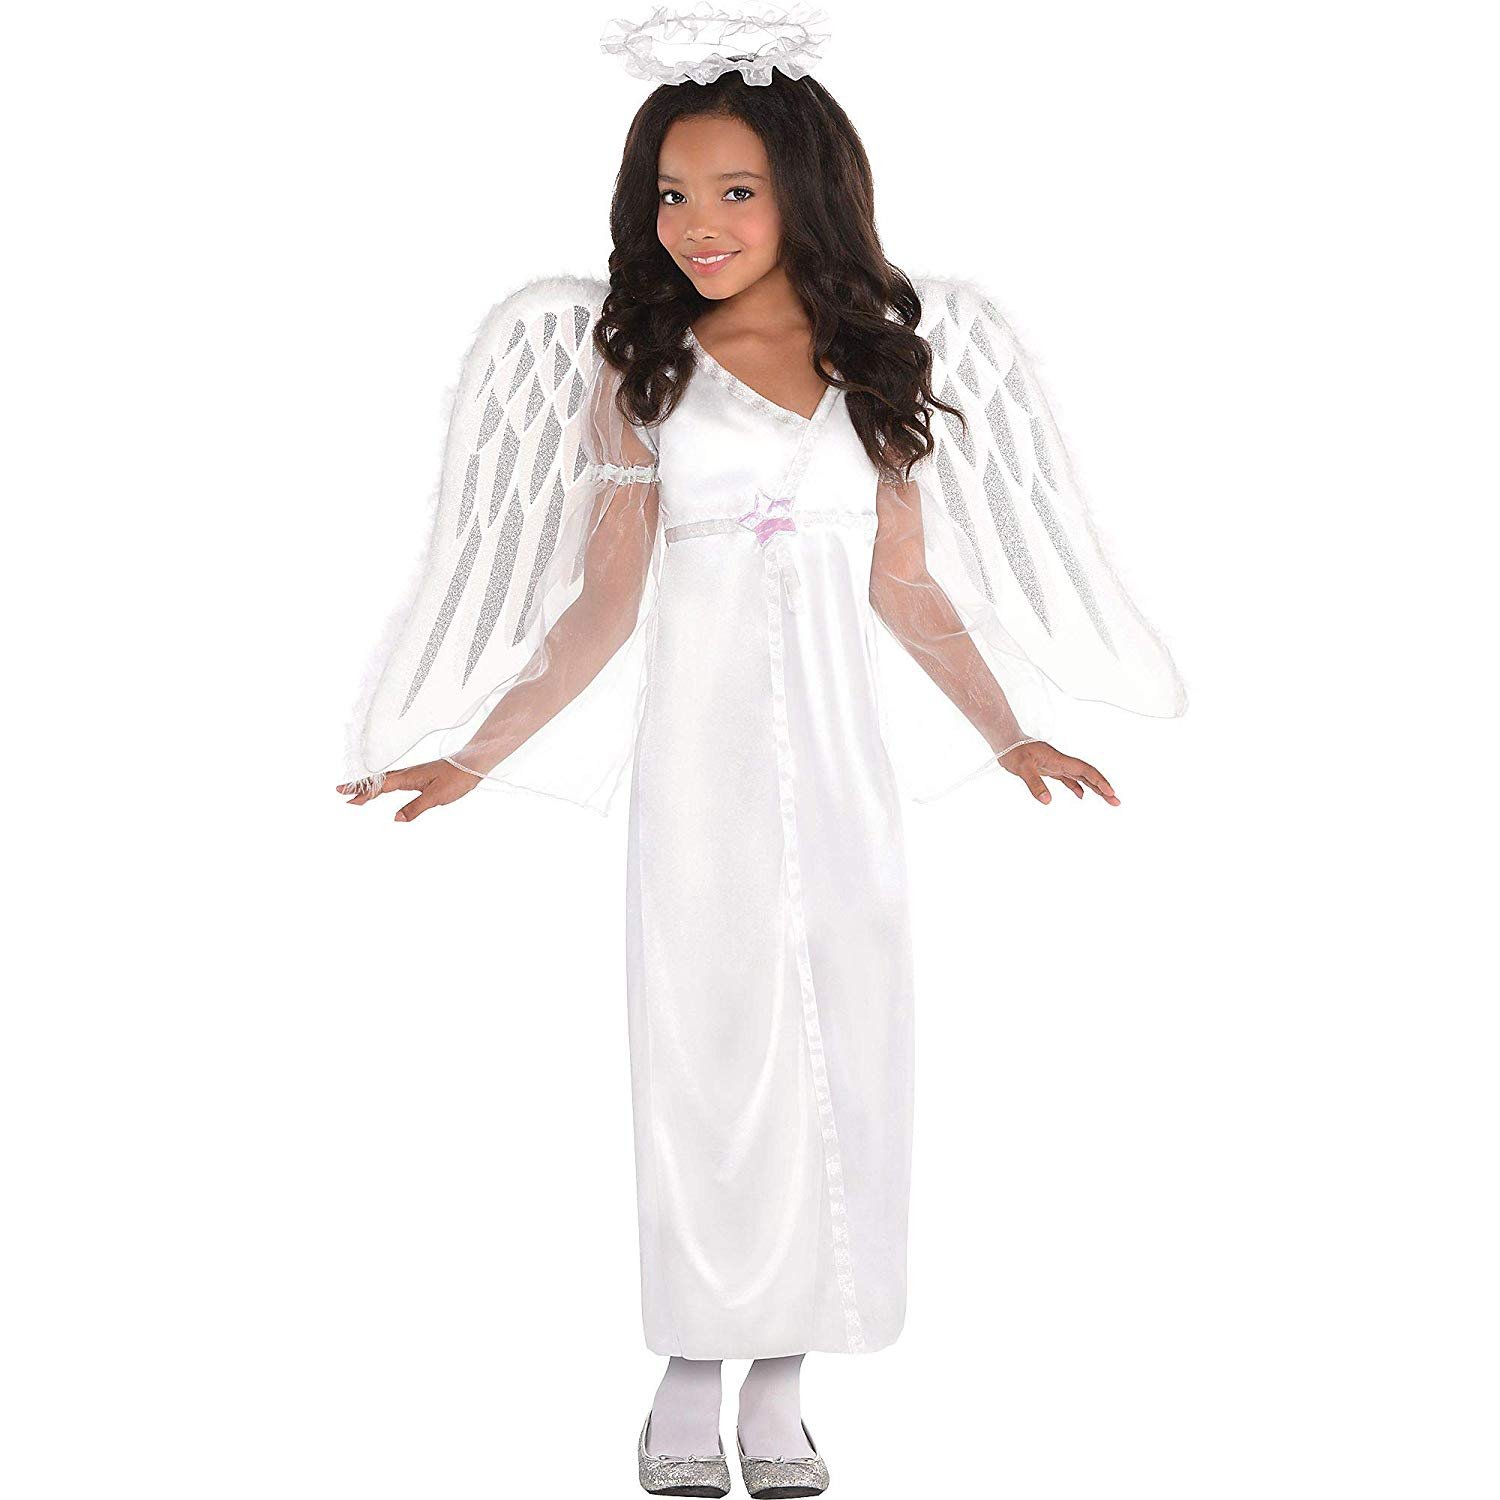 42+ Angel Halloween Costume Ideas Image | Home Decorations Ideas